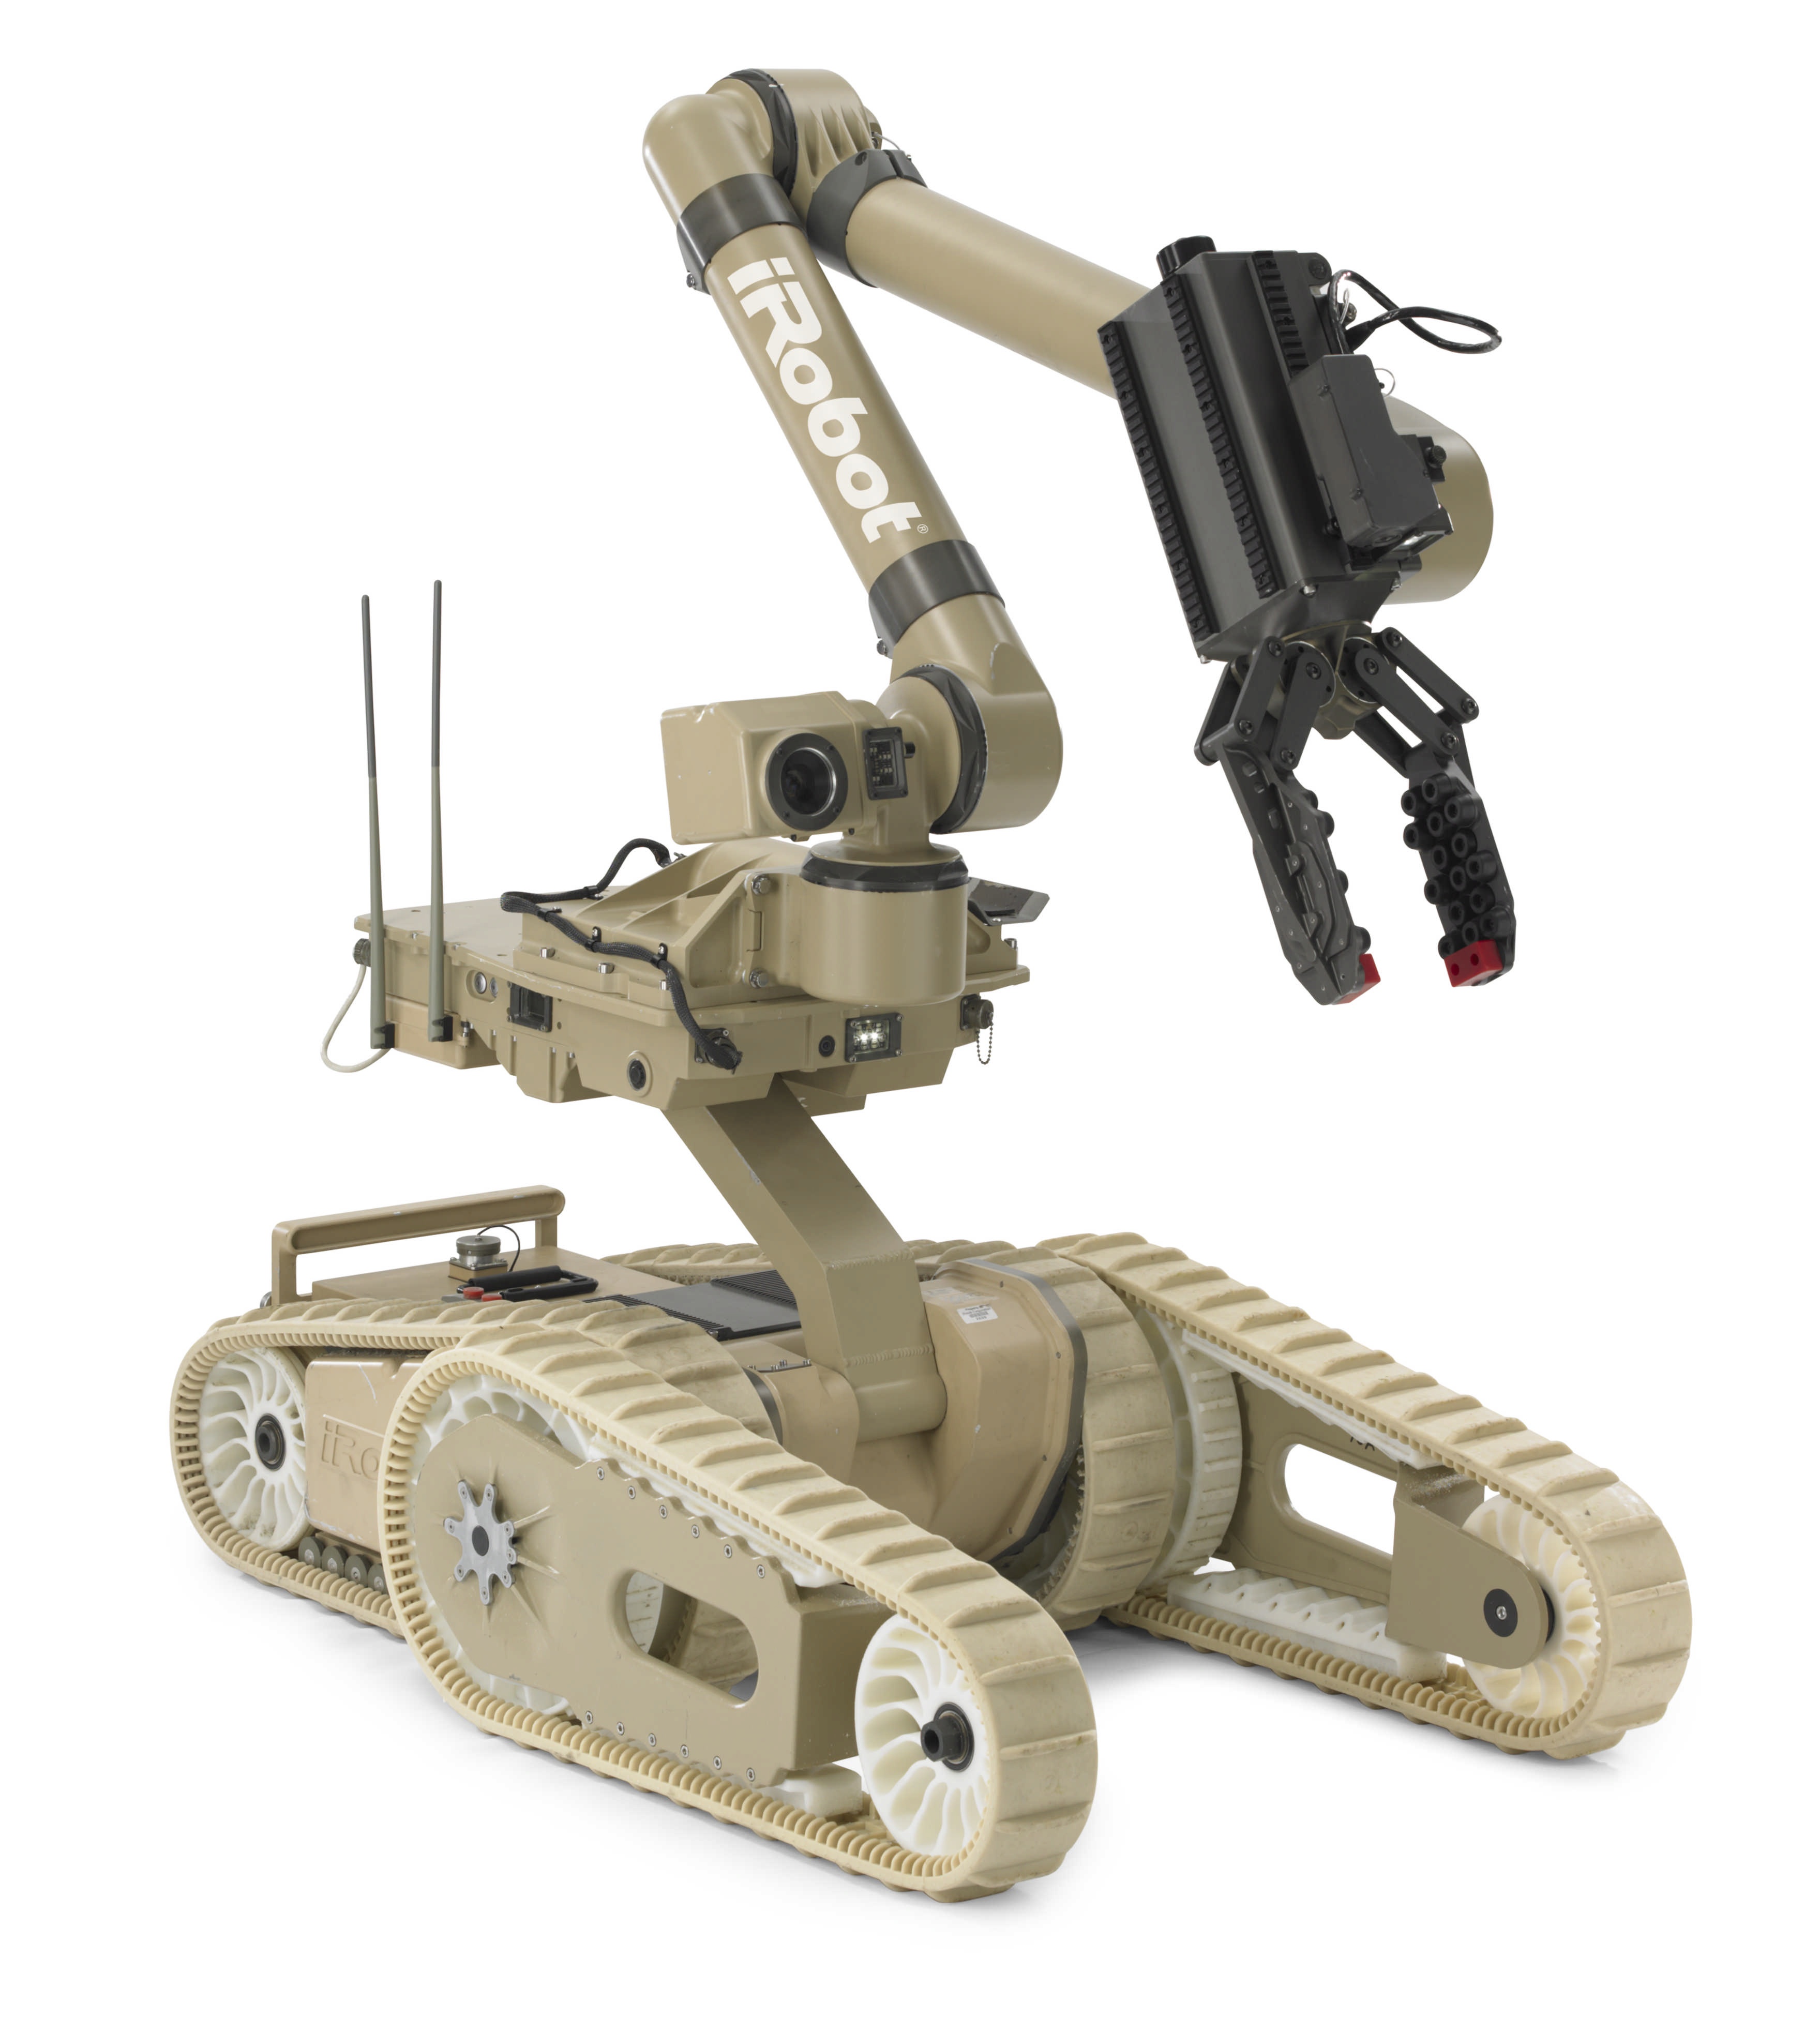 iRobot Announces Sale of Defense & Security Business to Arlington Capital  Partners - Feb 4, 2016